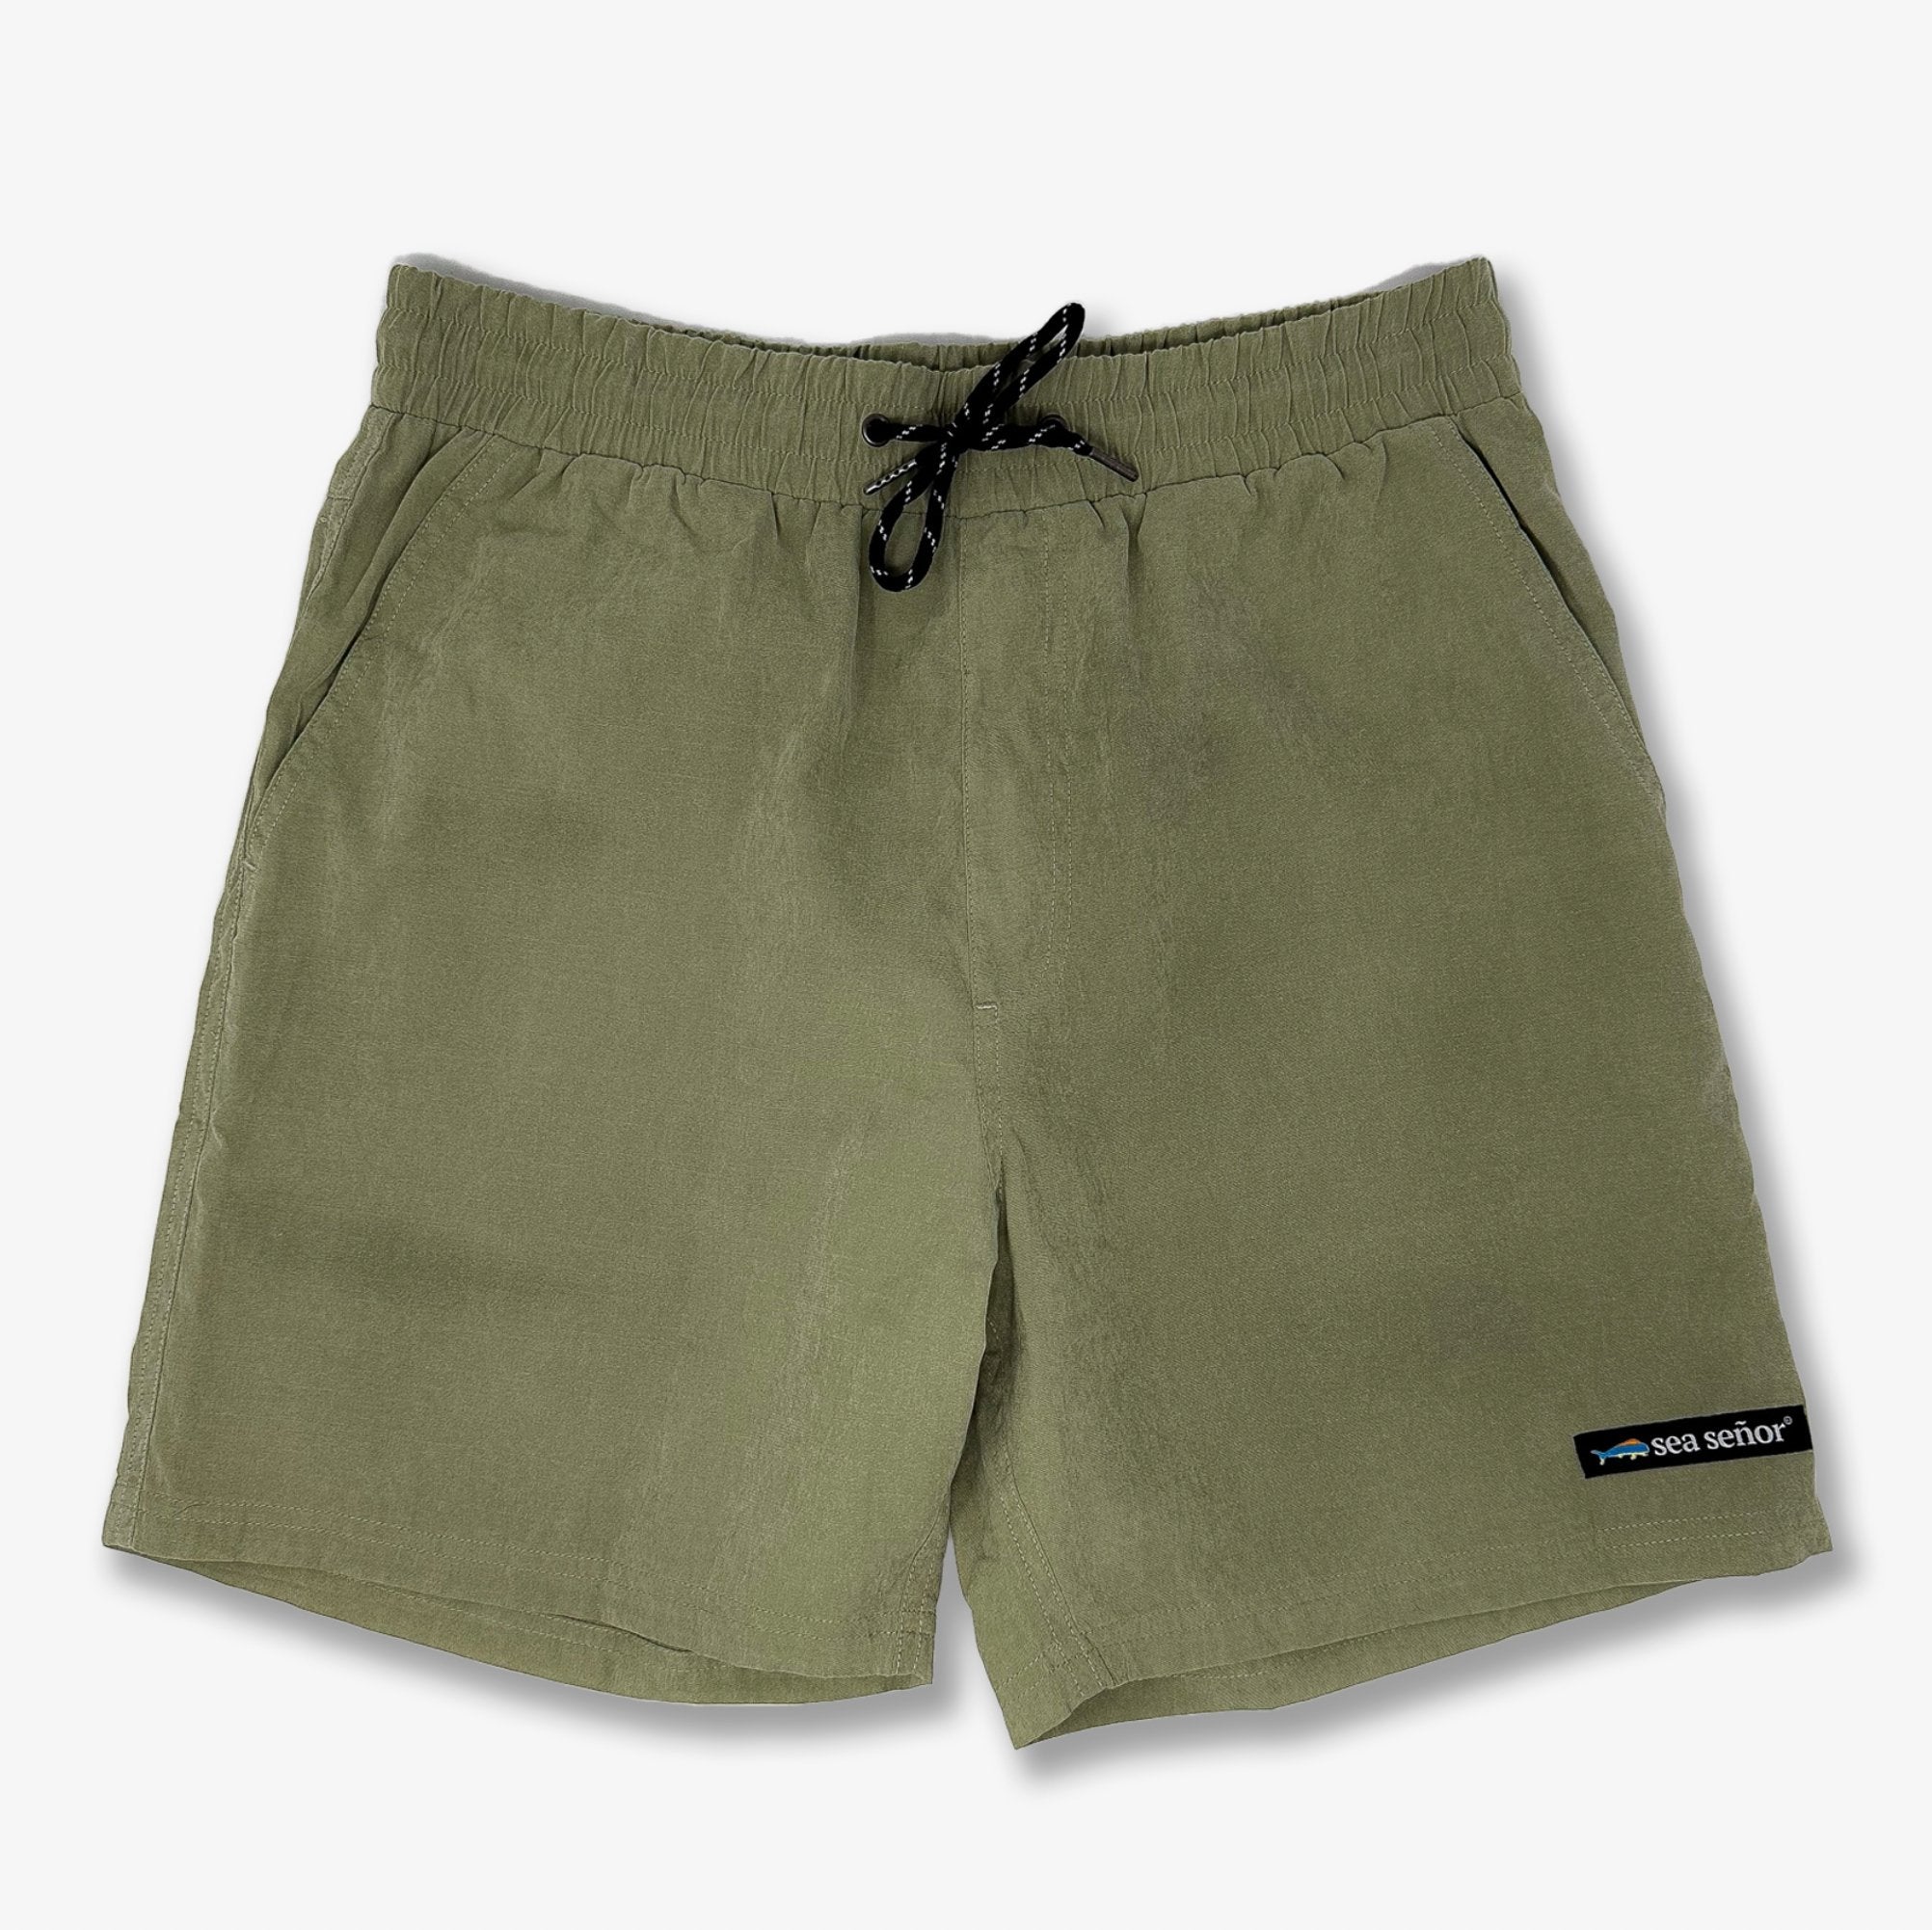 Beach Shorts - Sea Señor Outfitters